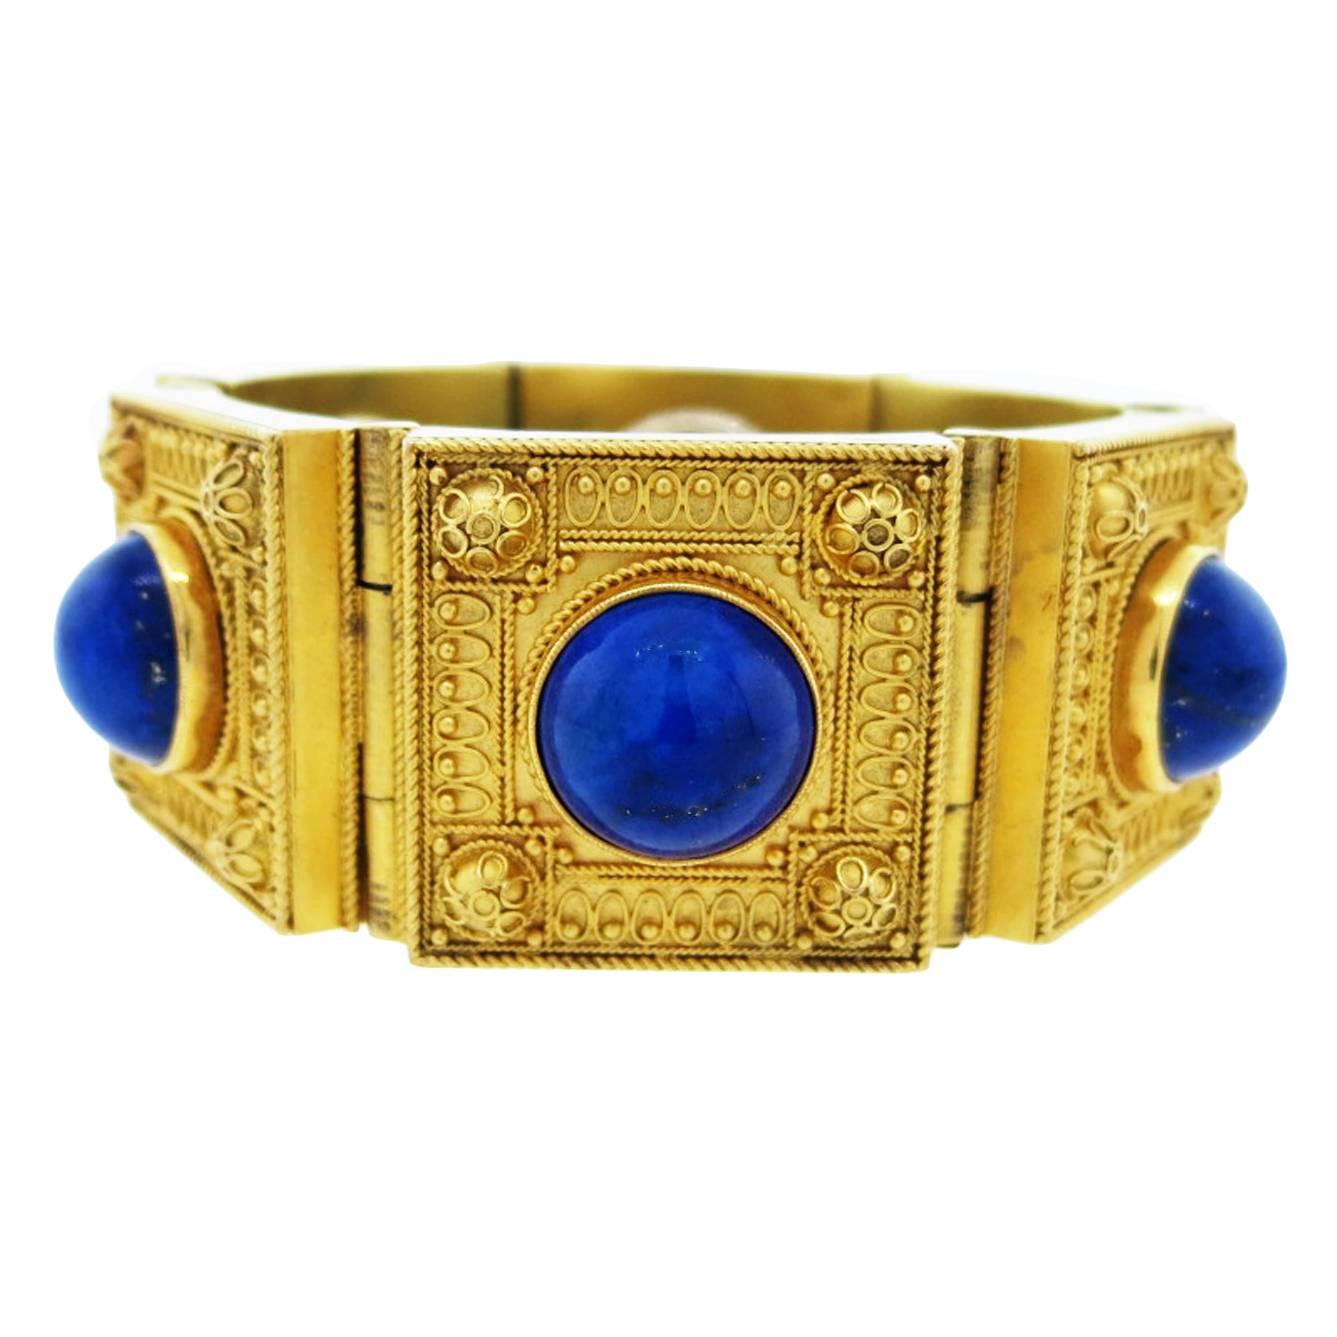 Remarkable Antique Lapis Lazuli Locket Gold Bracelet For Sale